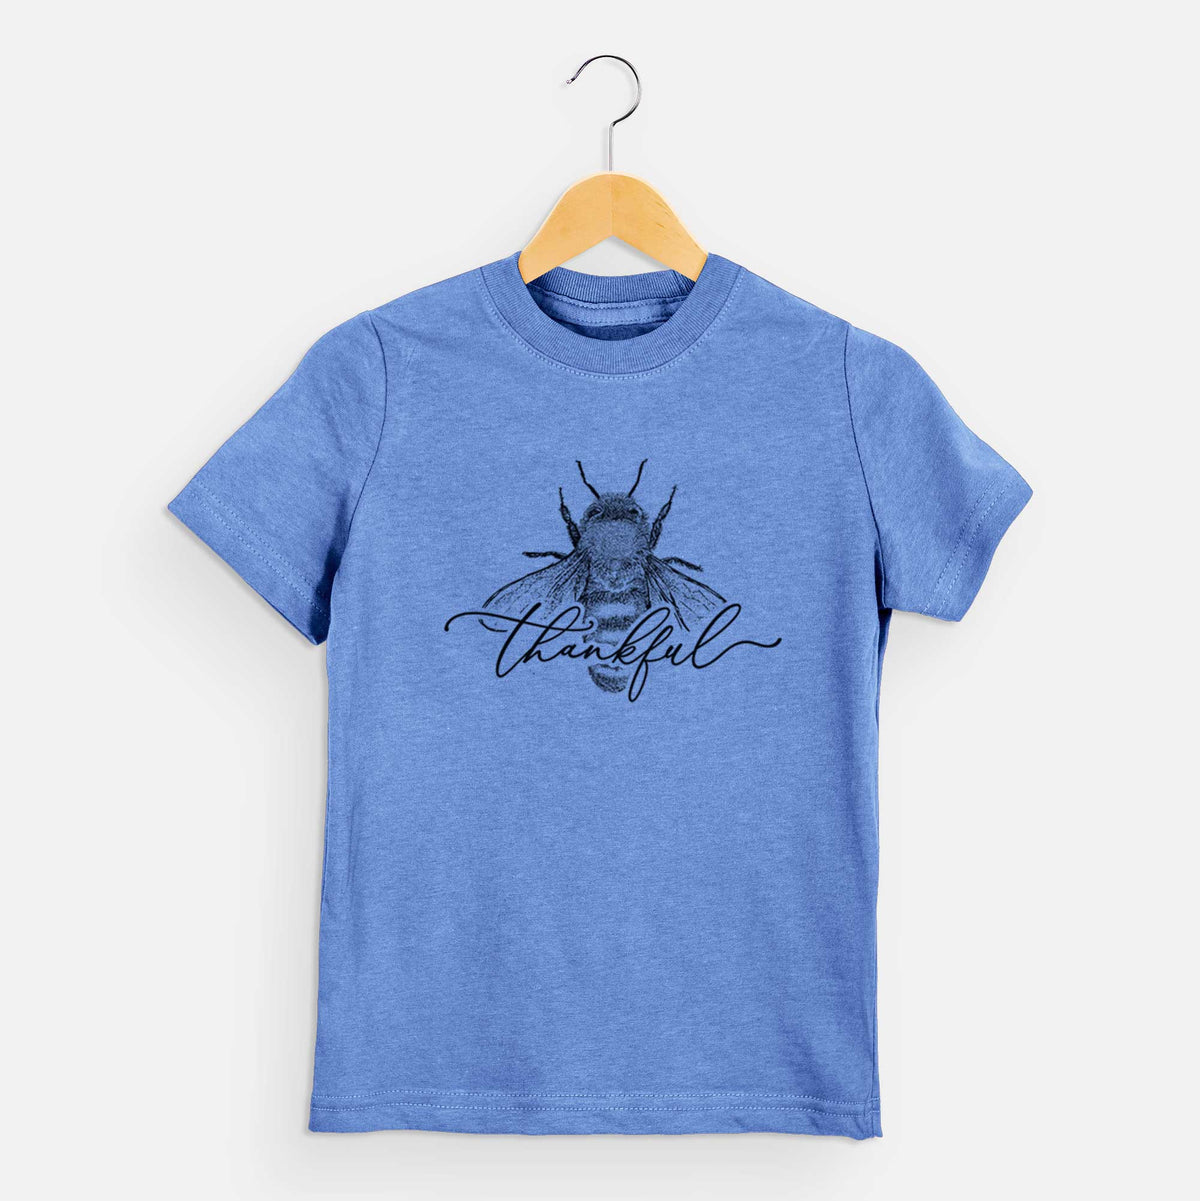 Bee Thankful - Kids Shirt